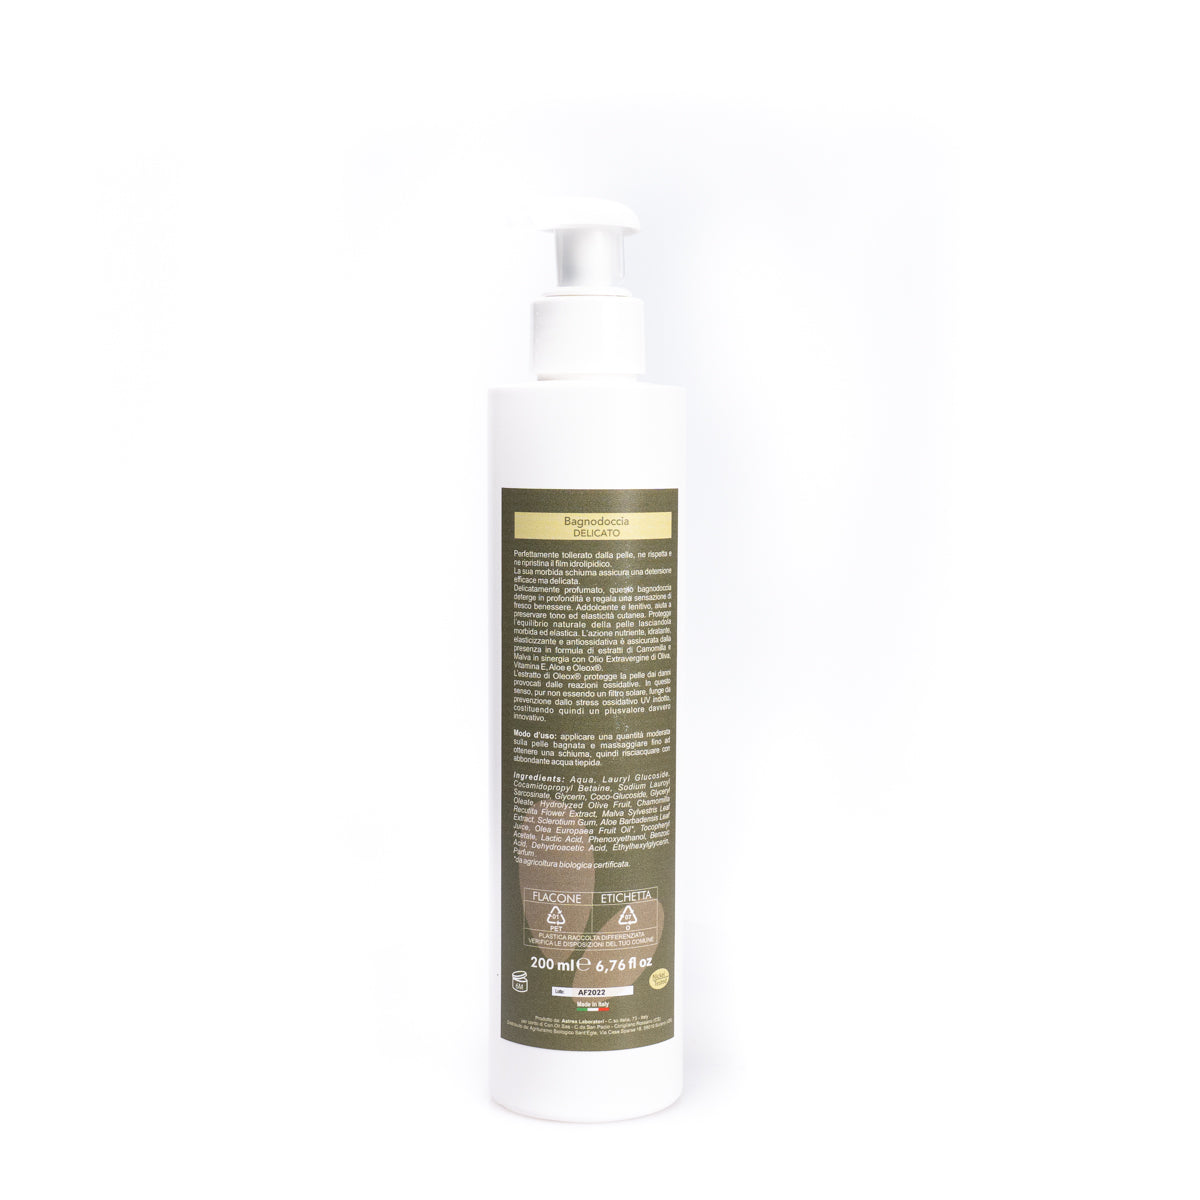 Shower bath, organic soap with EVO oil, 200 ml